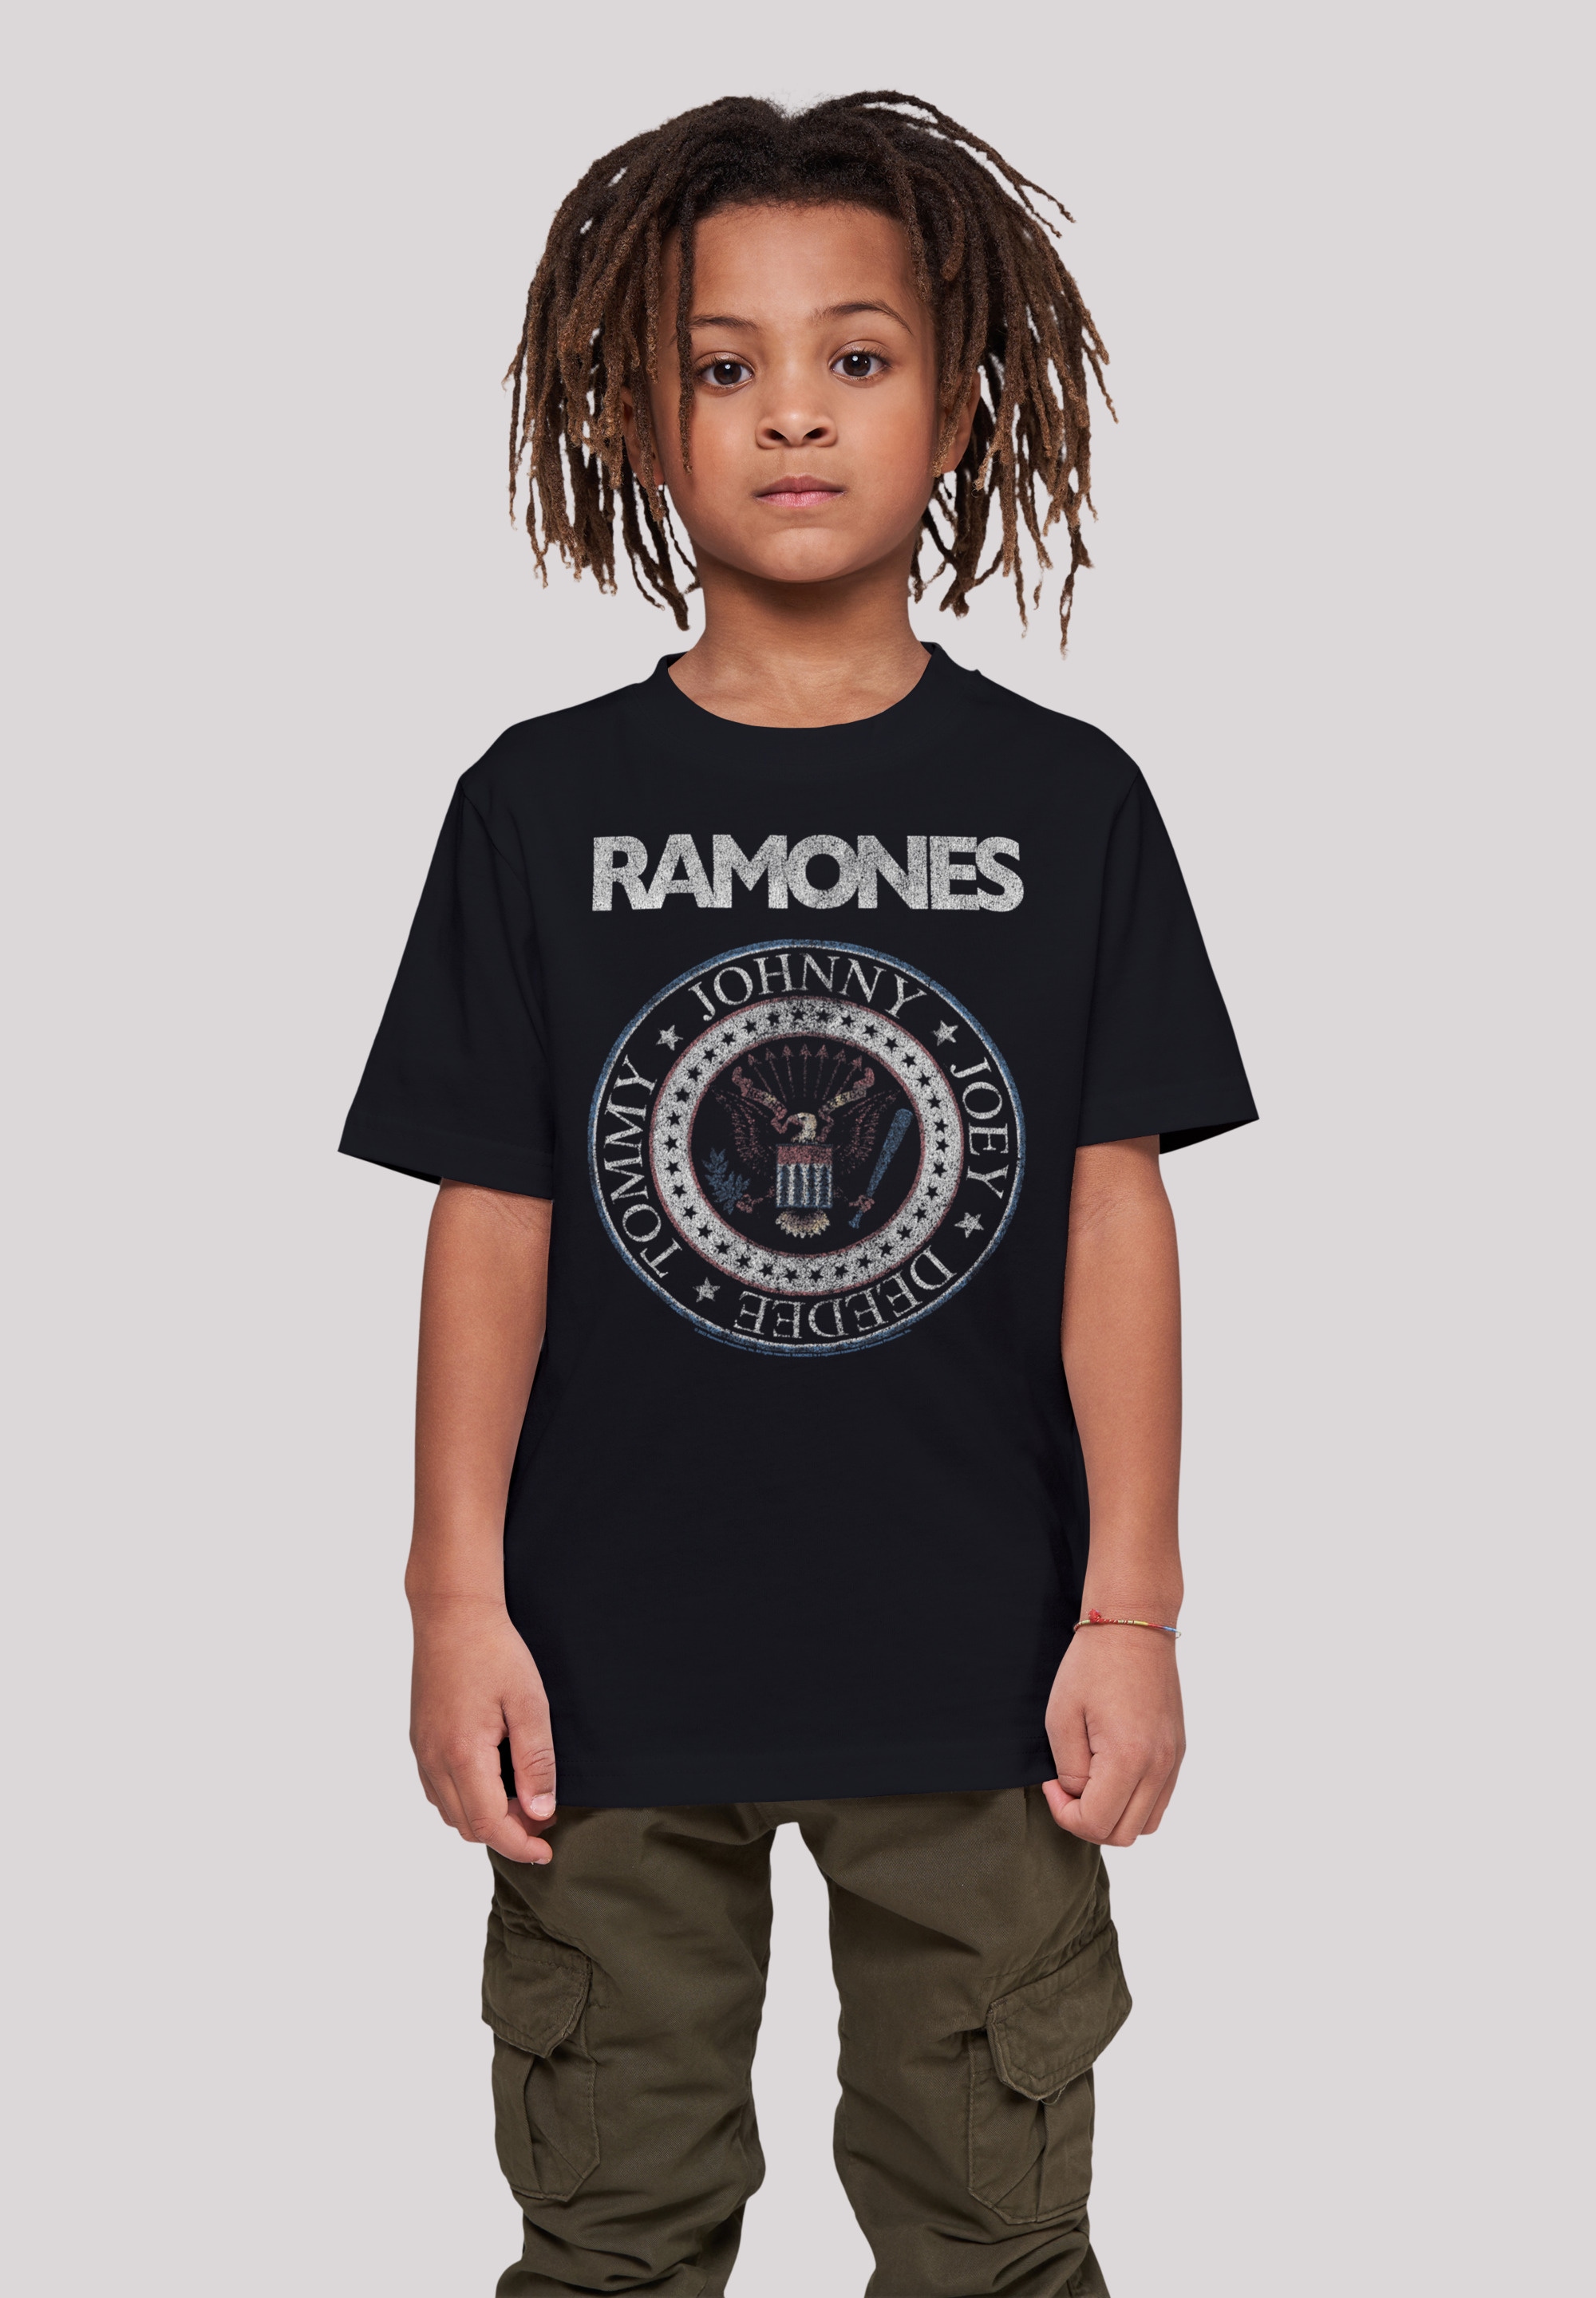 BAUR Rock-Musik T-Shirt Rock Qualität, Band Band, And Premium | Seal«, White Red kaufen Musik F4NT4STIC »Ramones